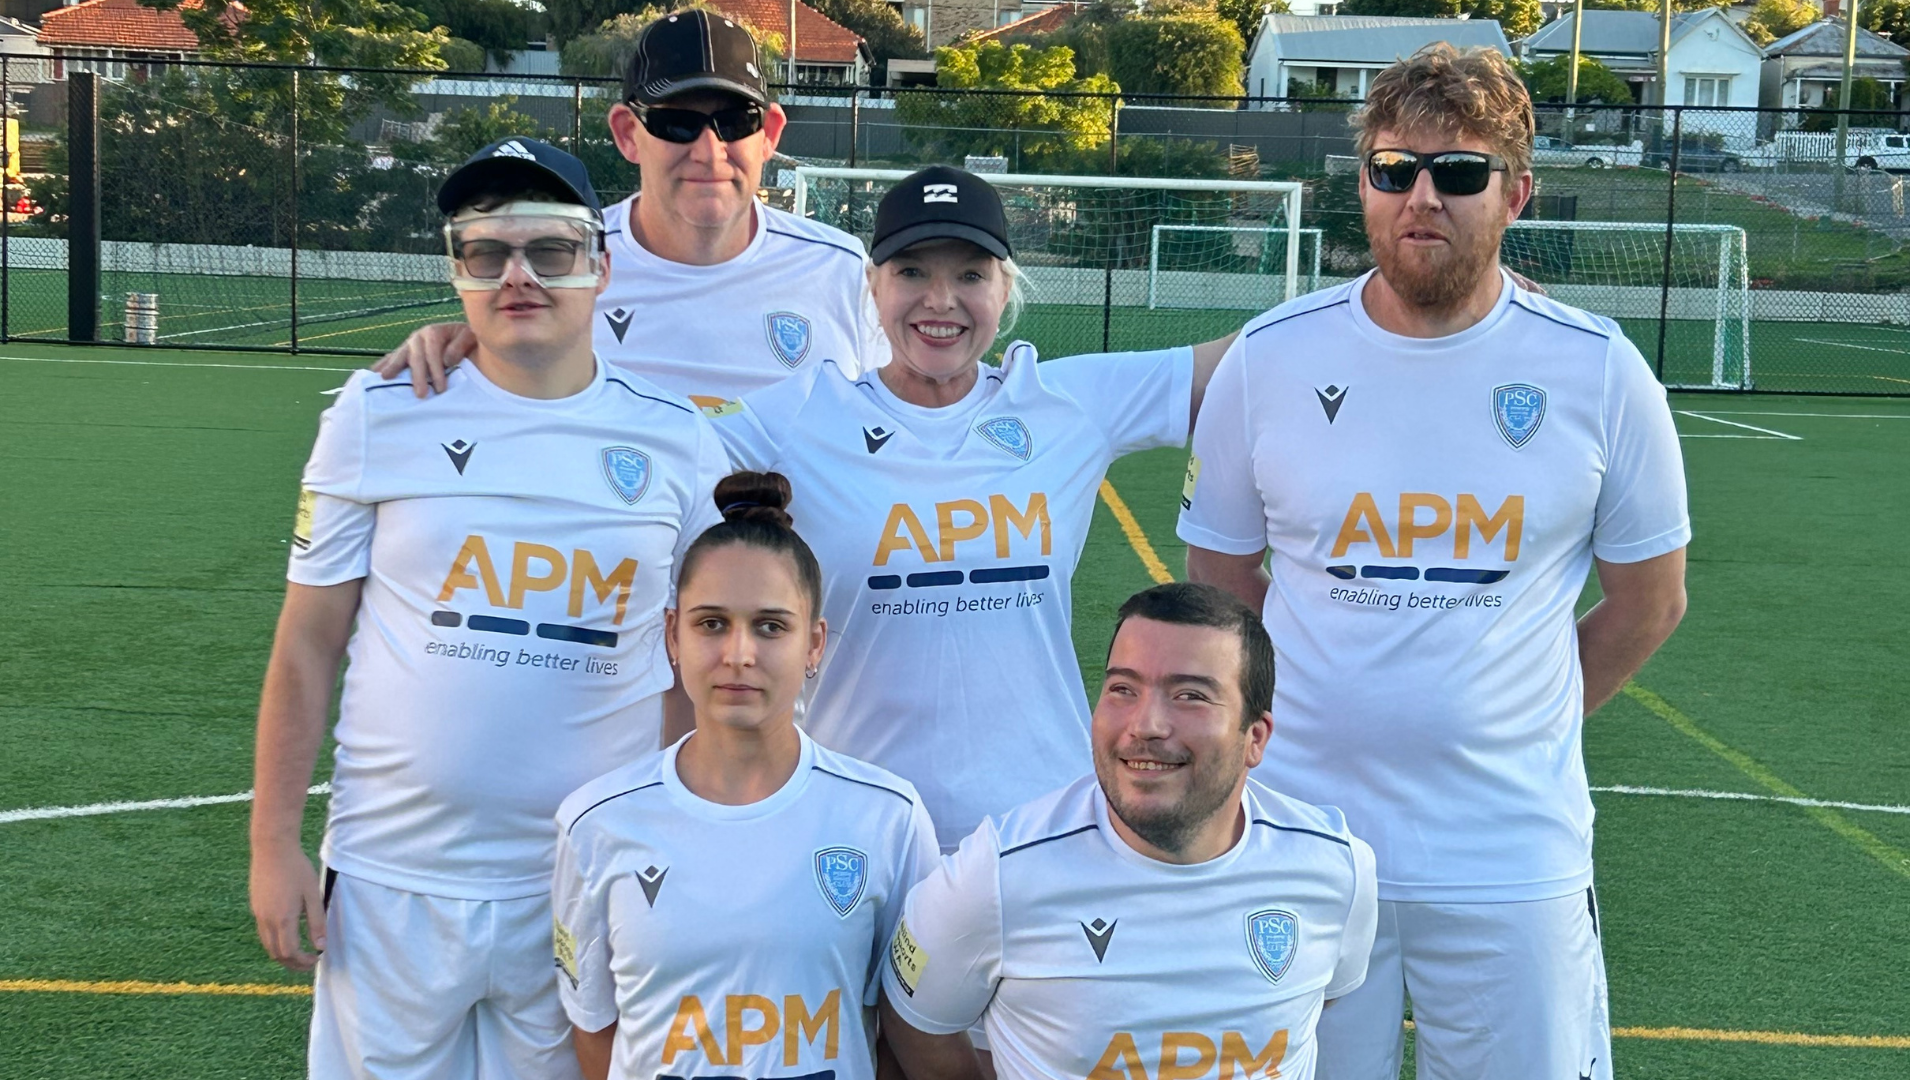 Members of the Perth soccer club blind futsal team